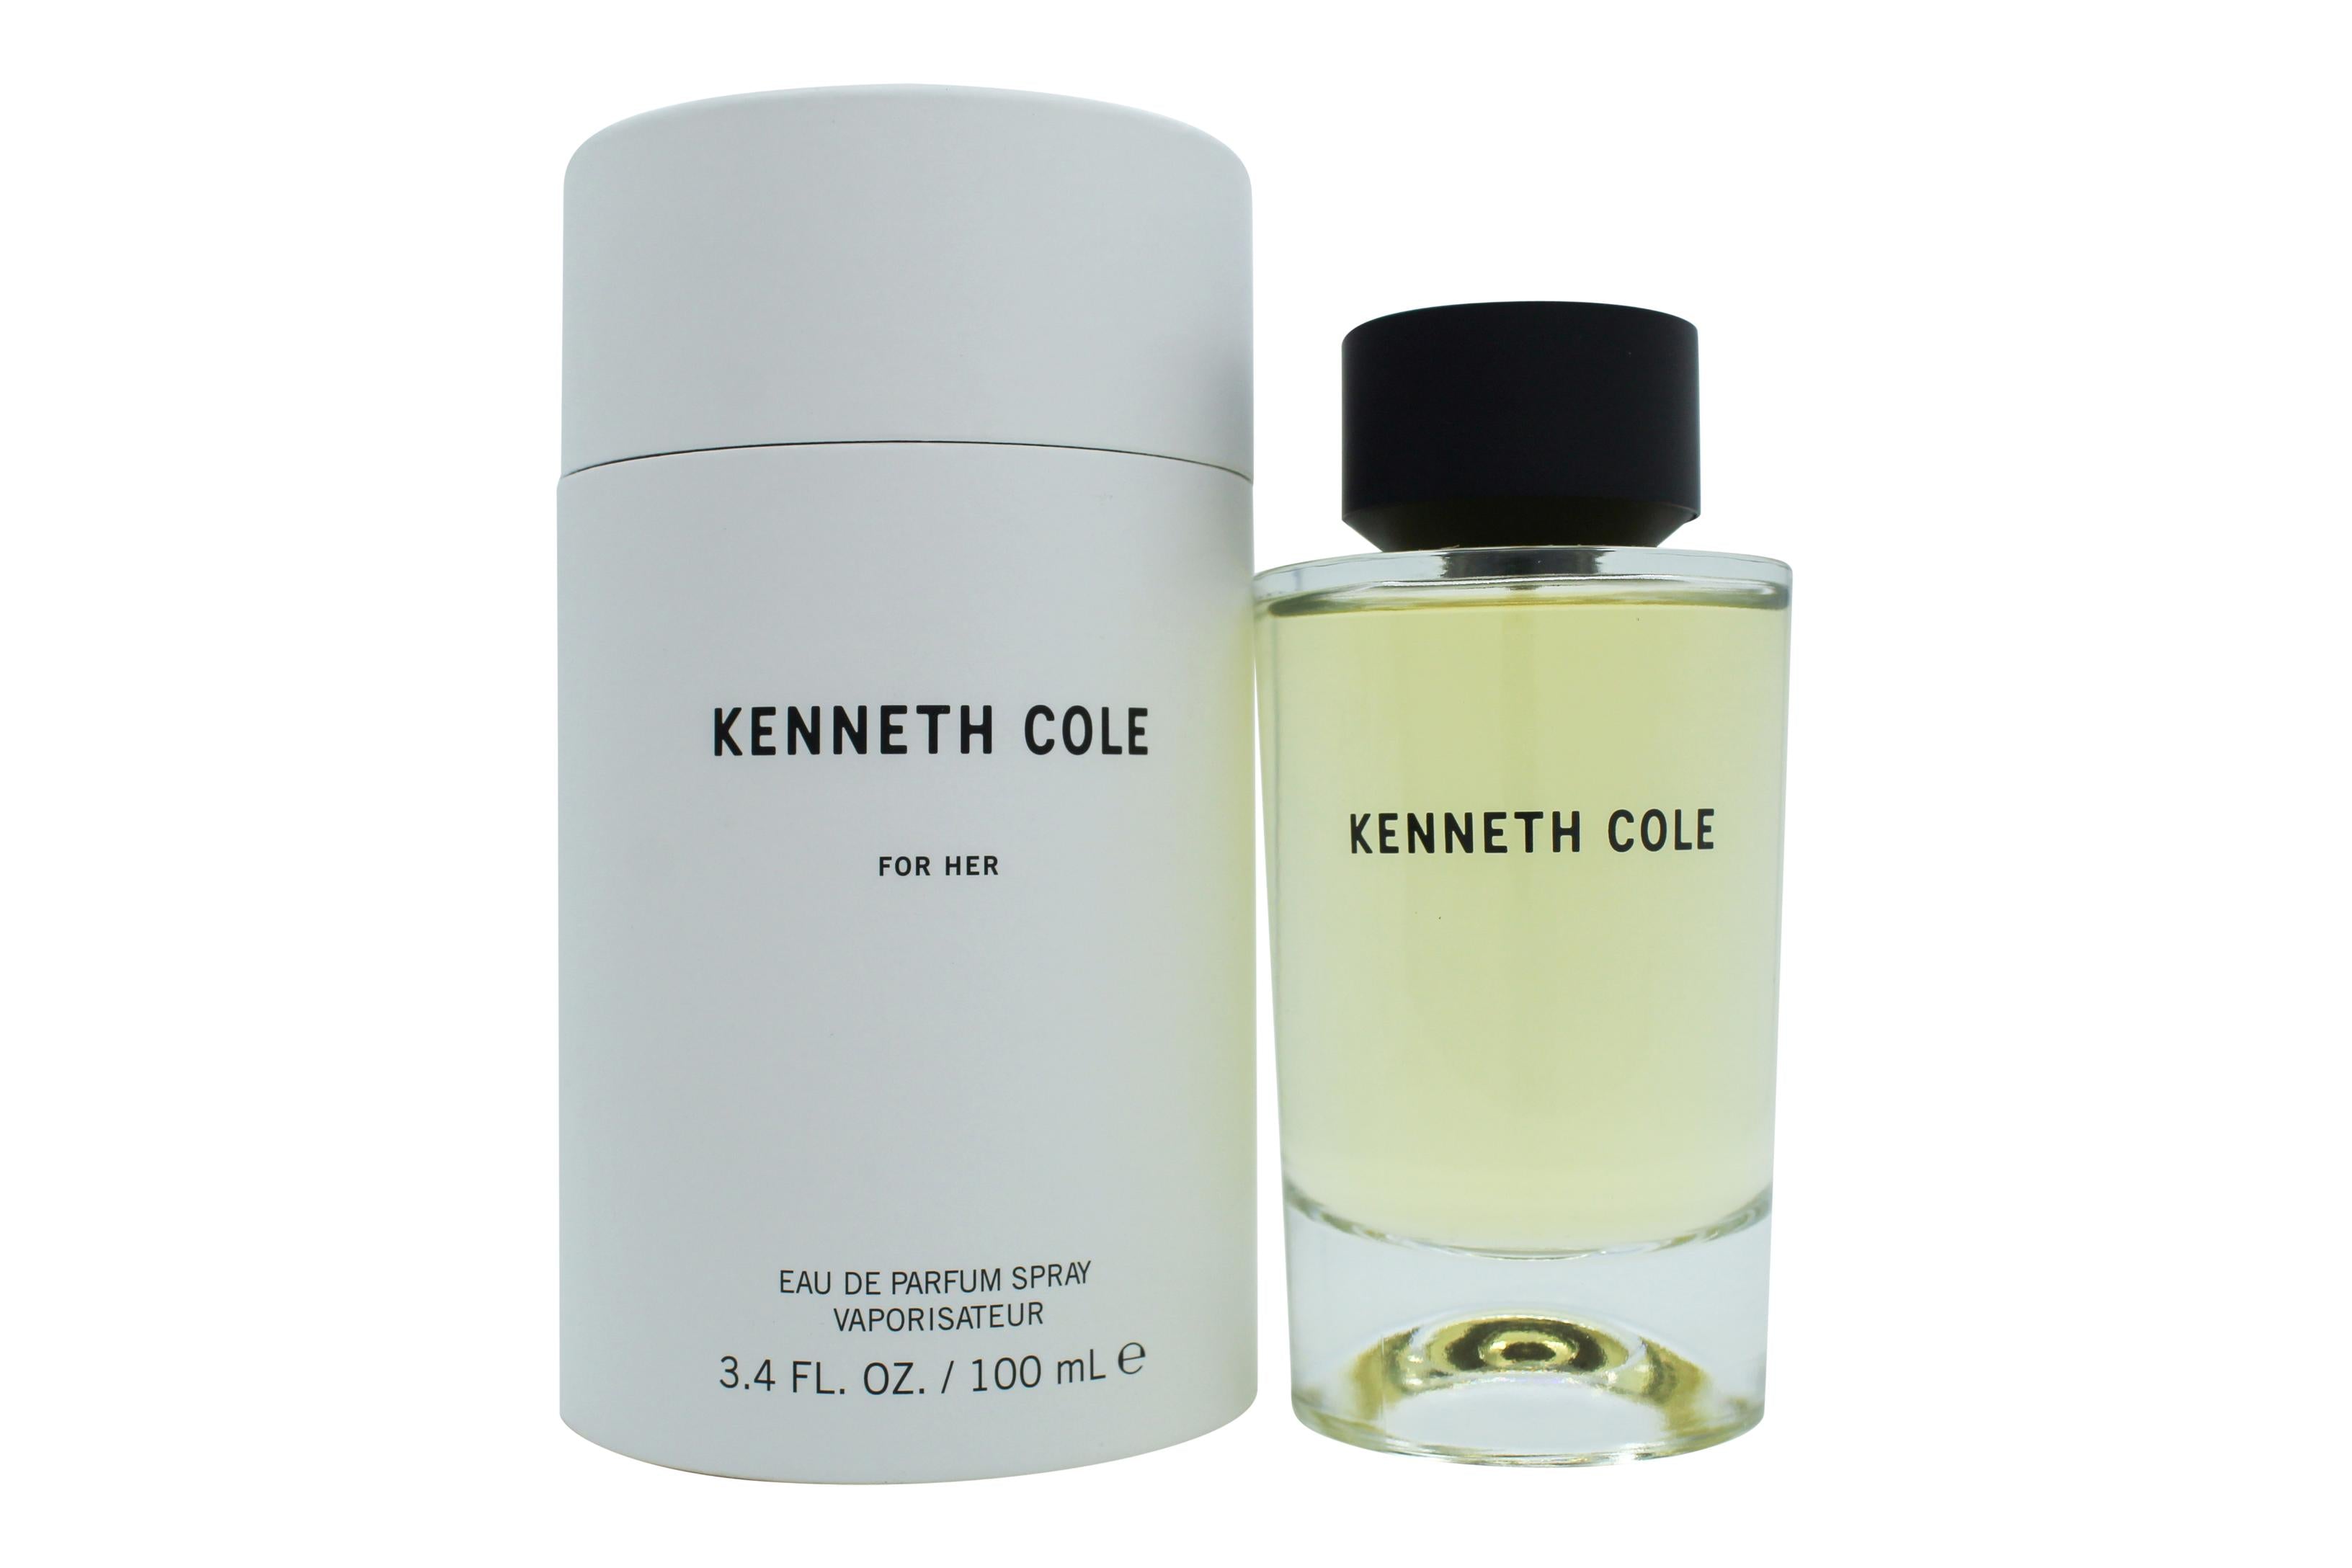 View Kenneth Cole For Her Eau de Parfum 100ml Spray information